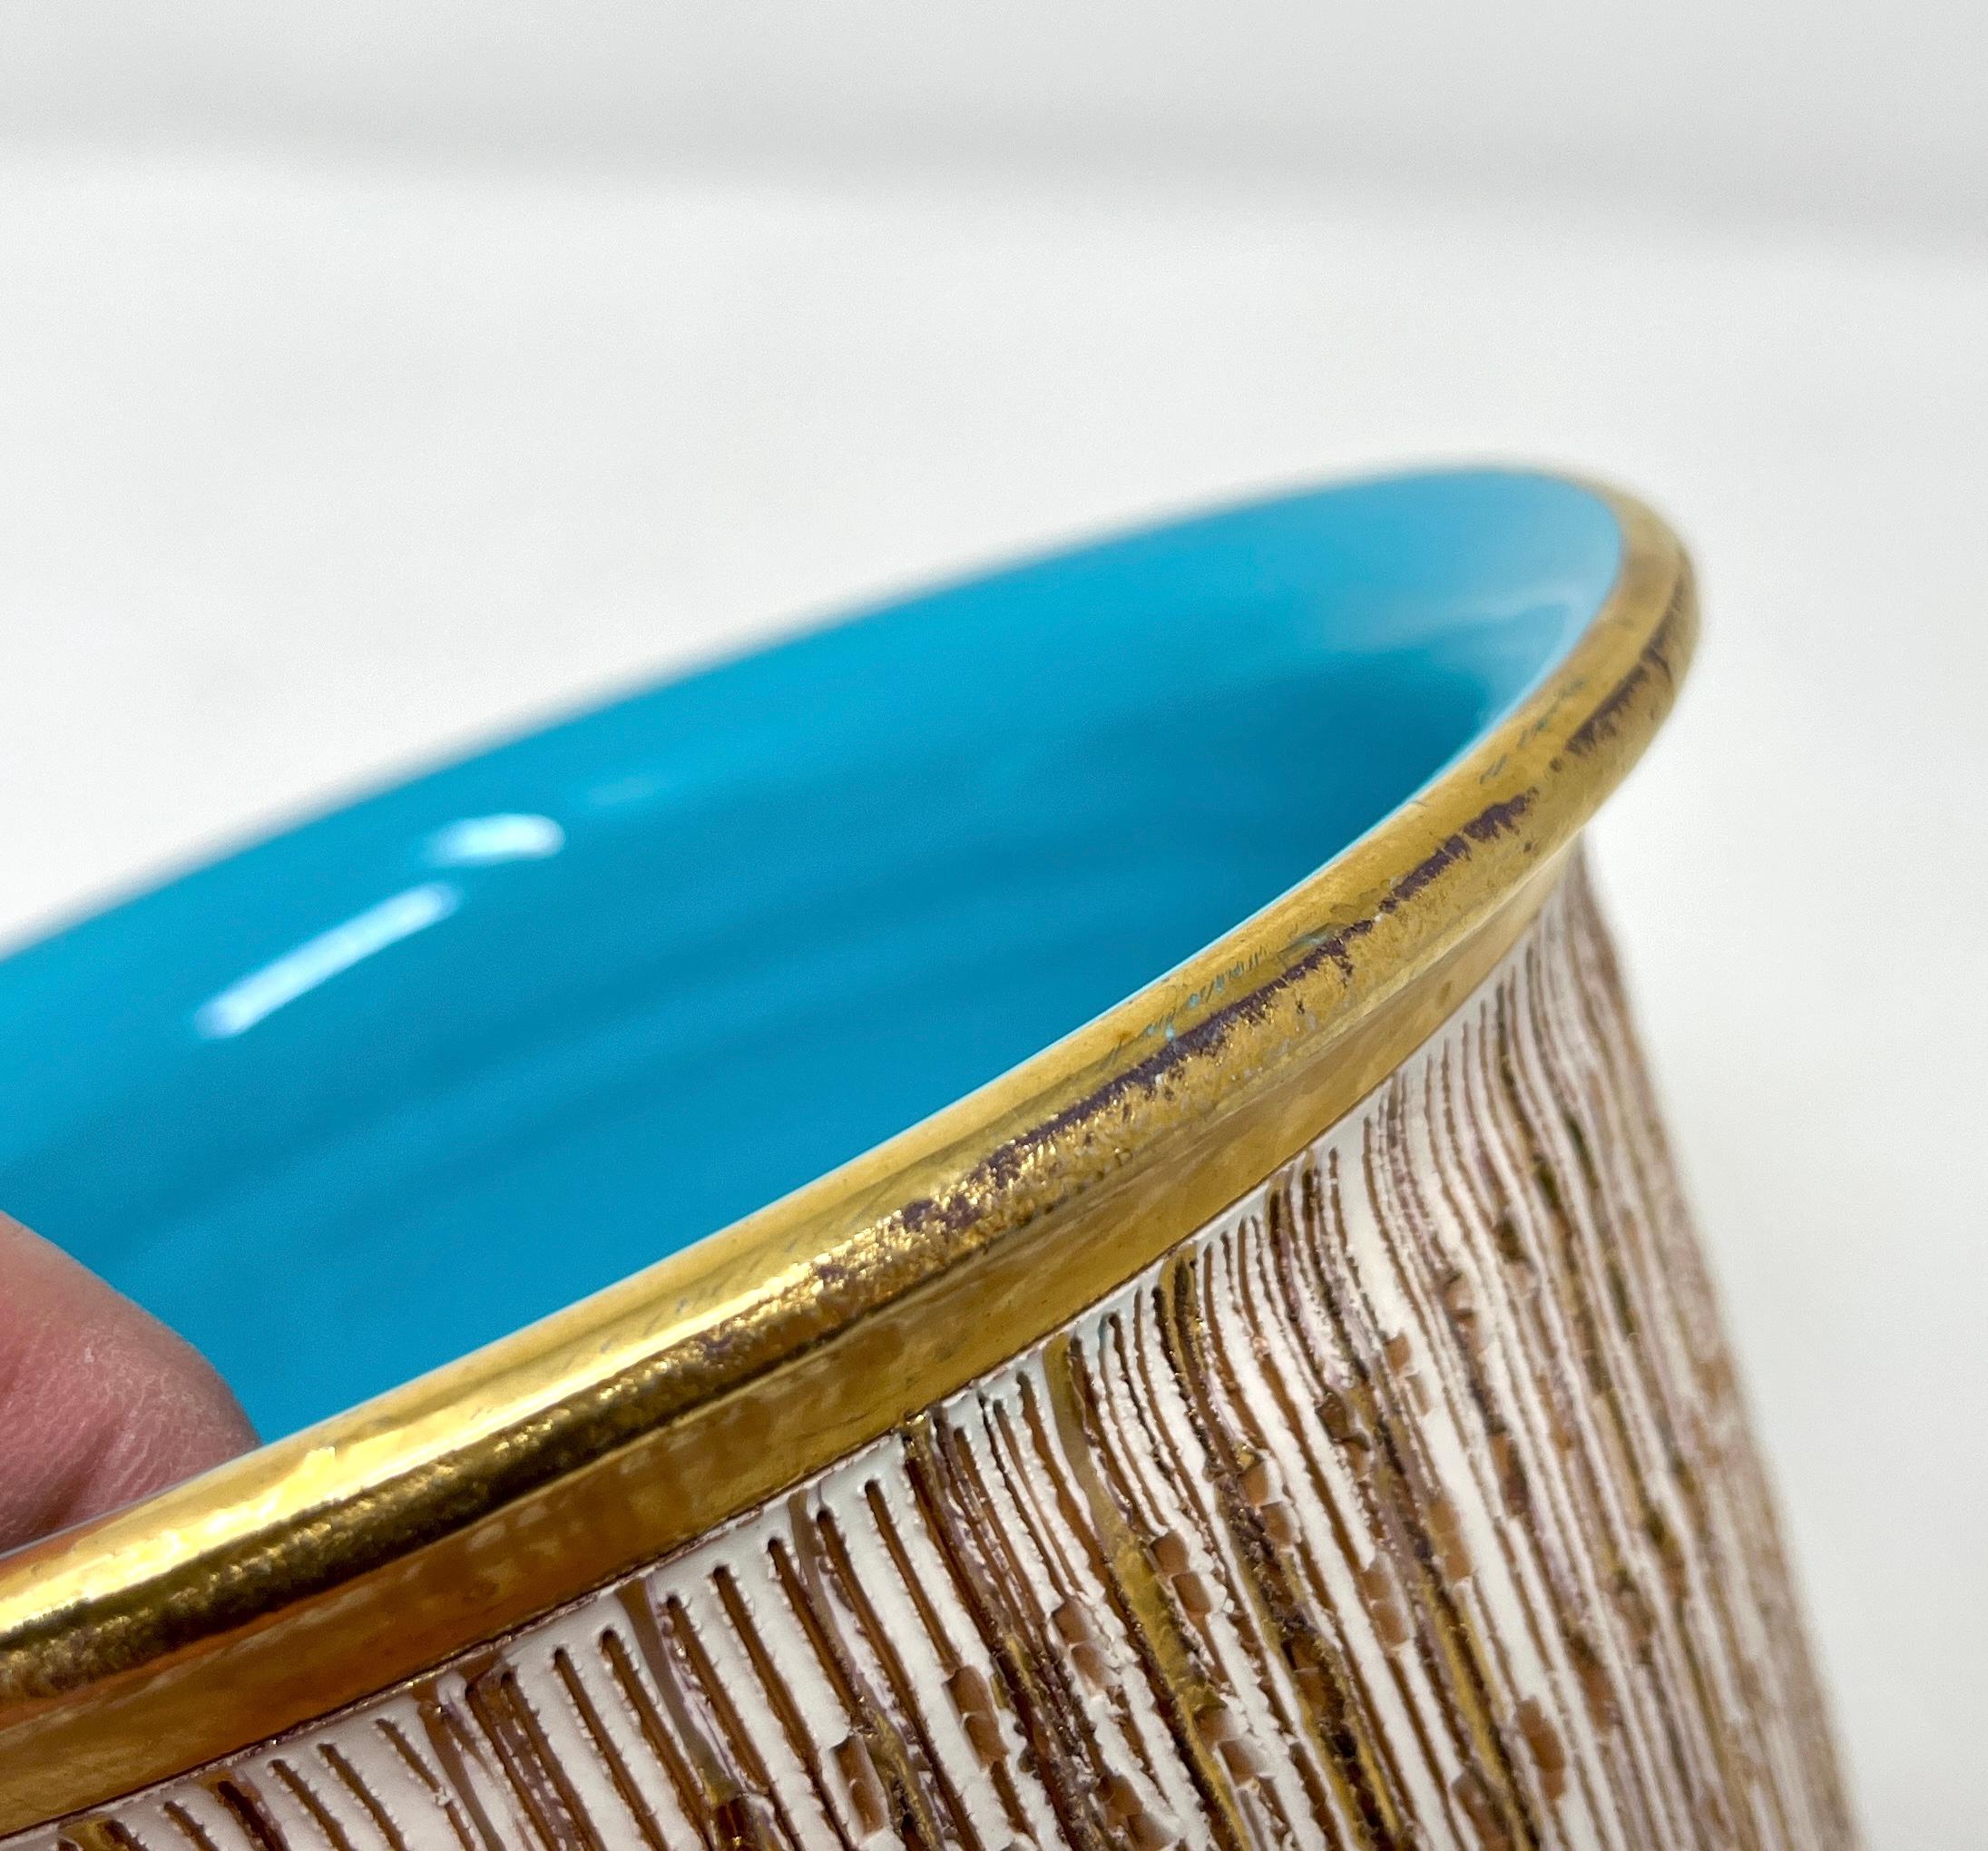 Bitossi Seta (Silk) Series Gold Turquoise Planter Pot, Aldo Londi, Sgraffito  For Sale 2